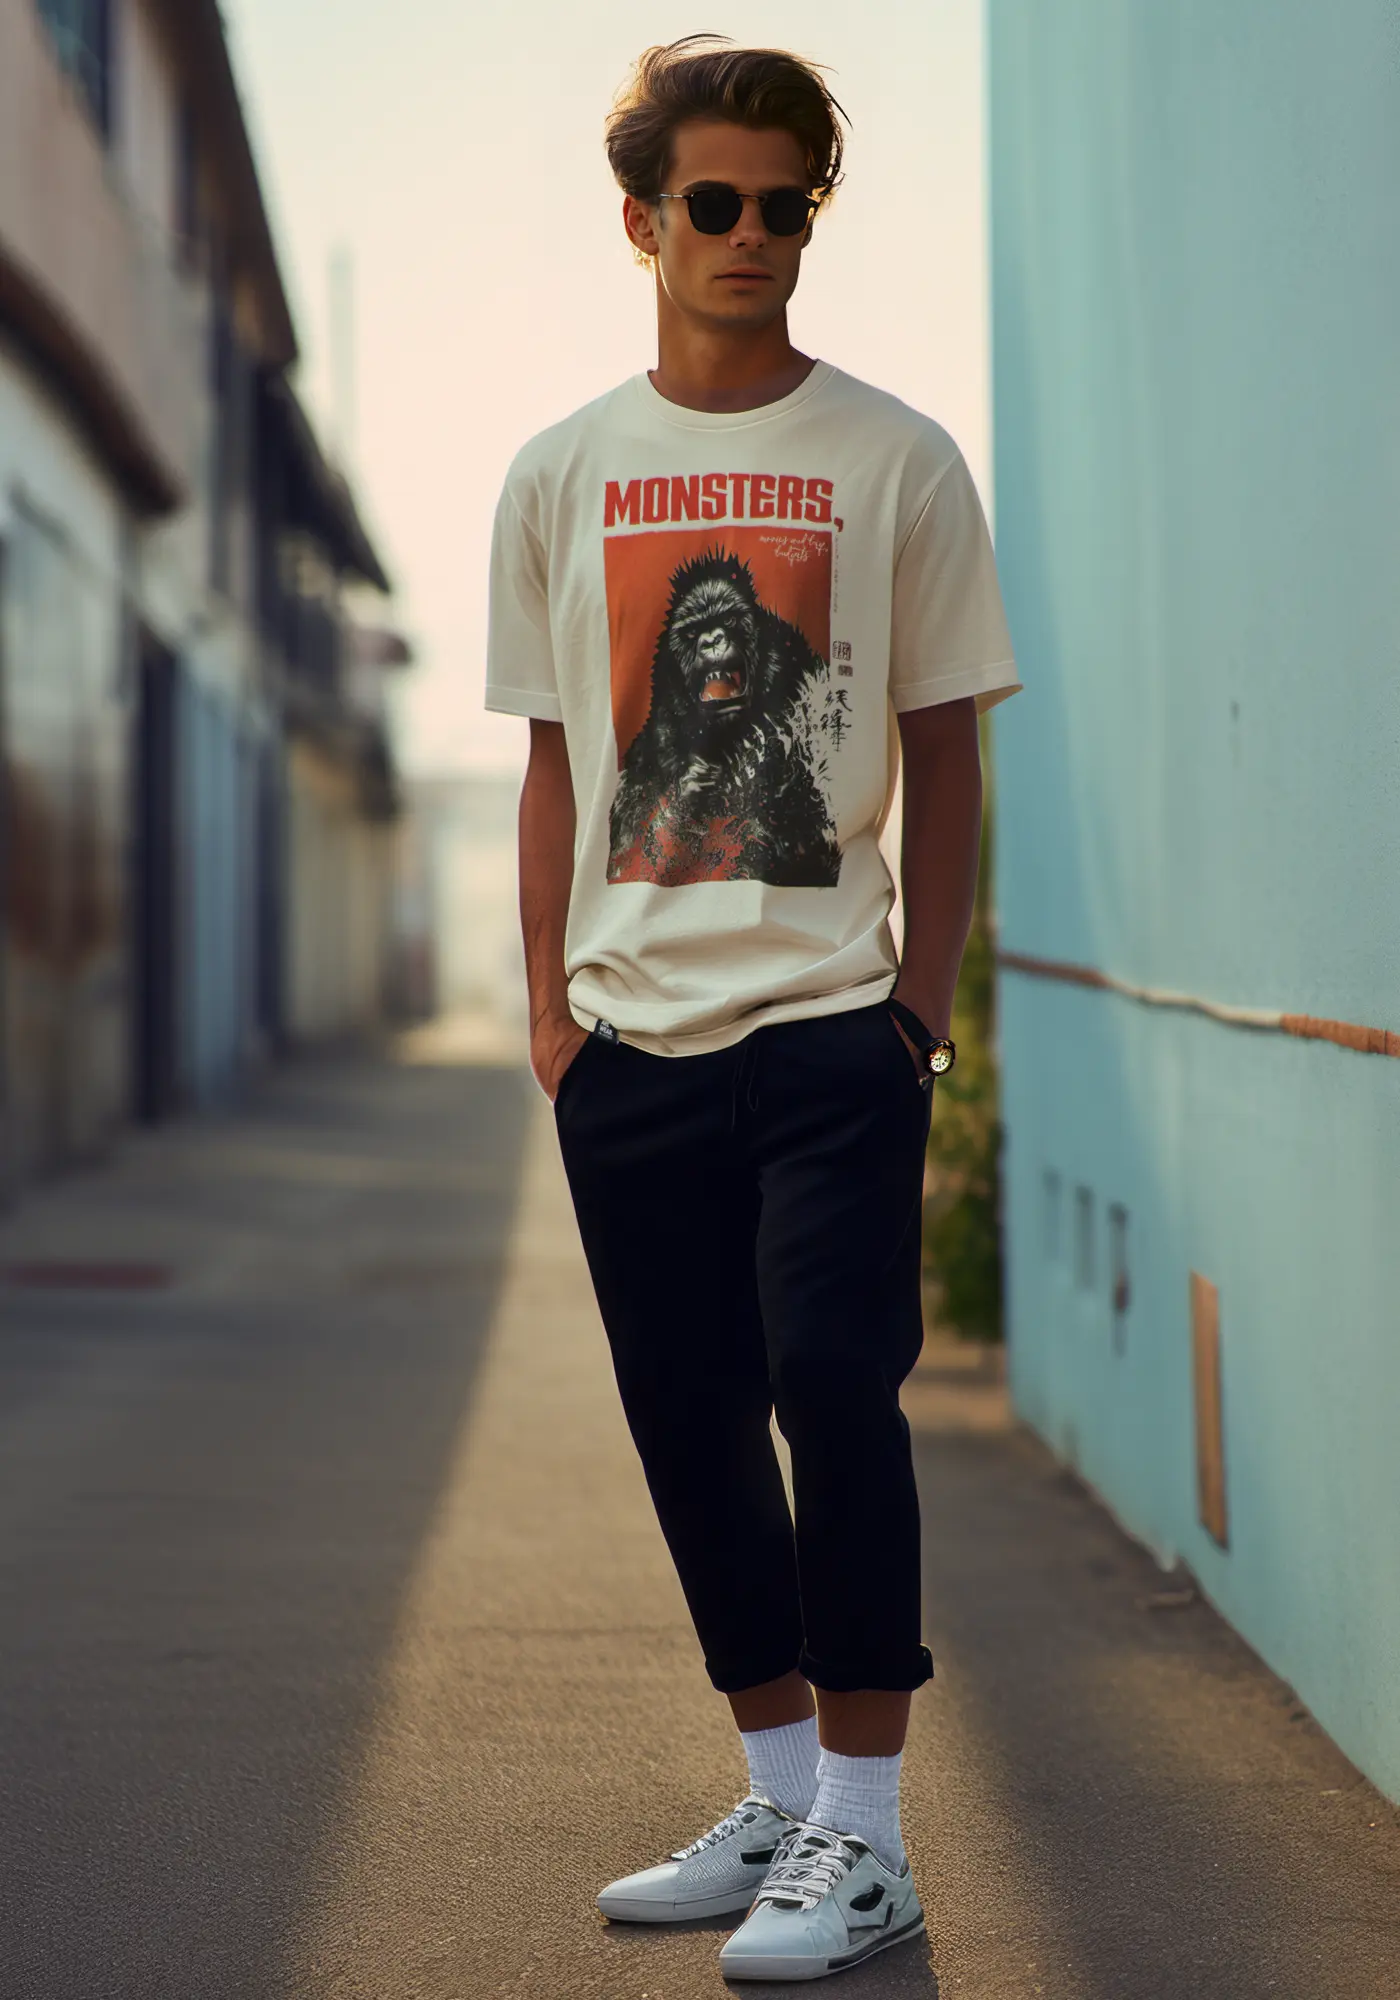 Jordan trägt das Monster T-Shirt Gorilla print vor Sonnenuntergangsstimmung